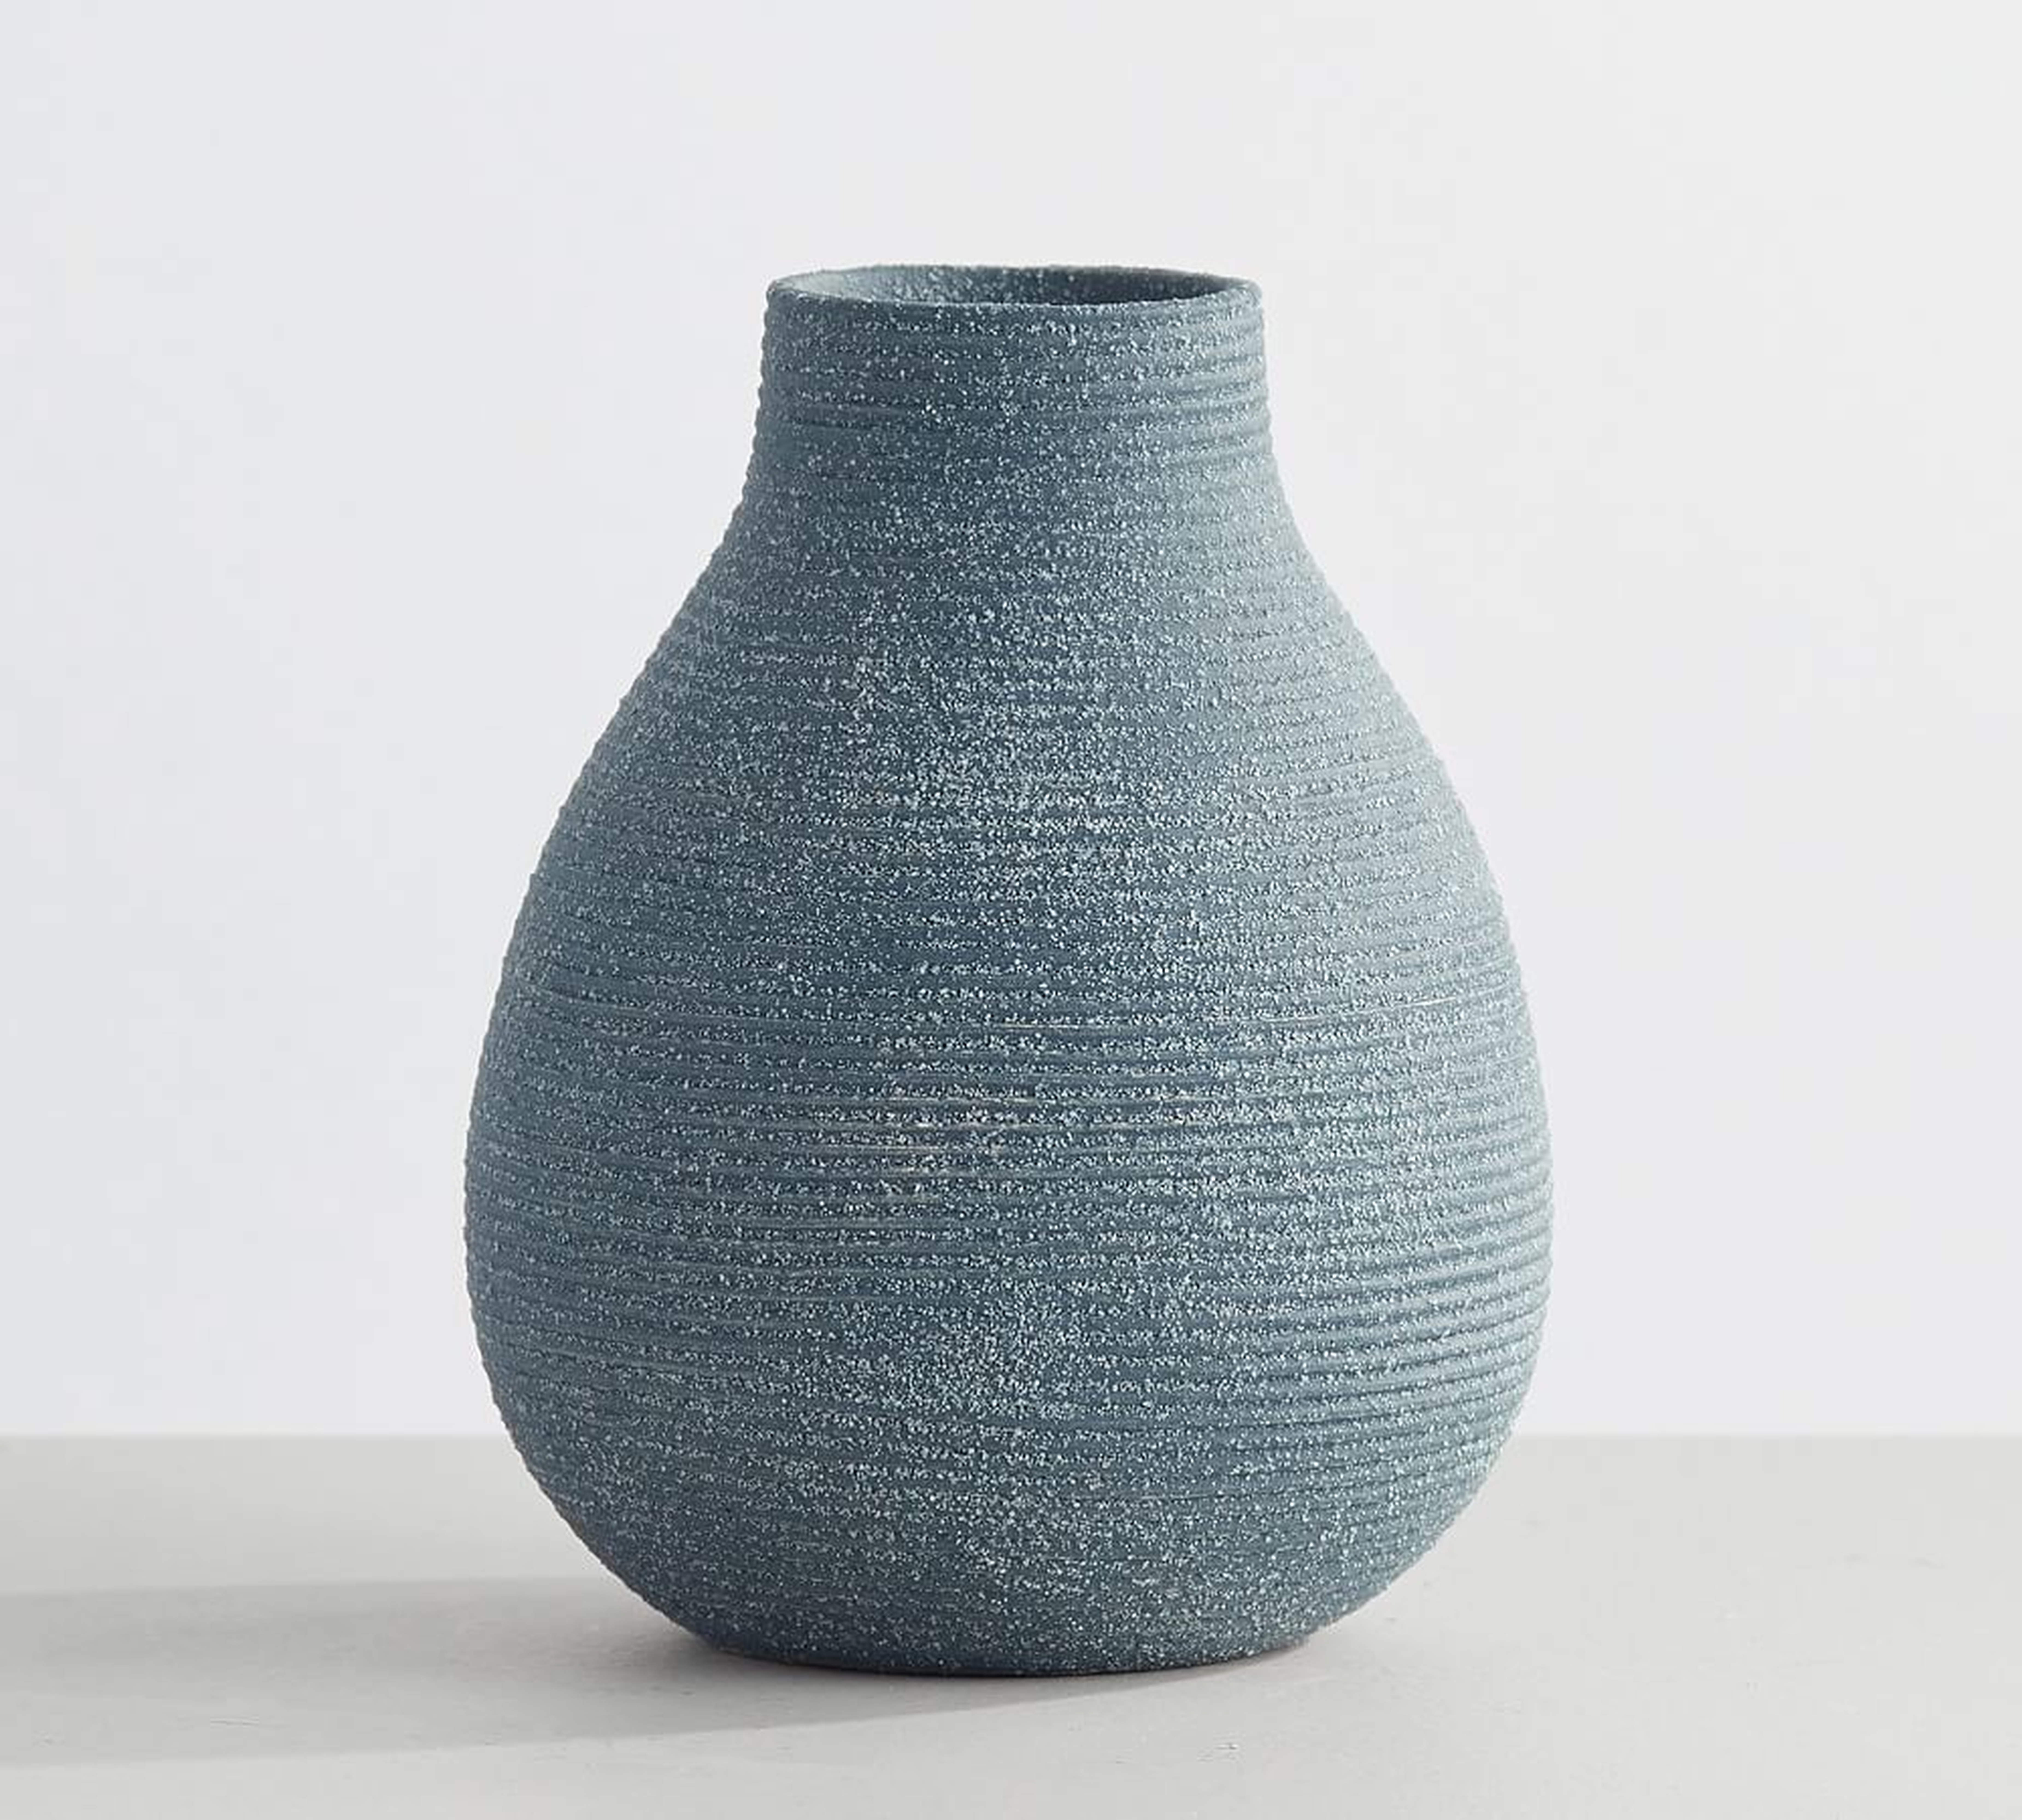 Bondi Terra Cotta Bud Vase, Blue, Large, 6"H - Pottery Barn